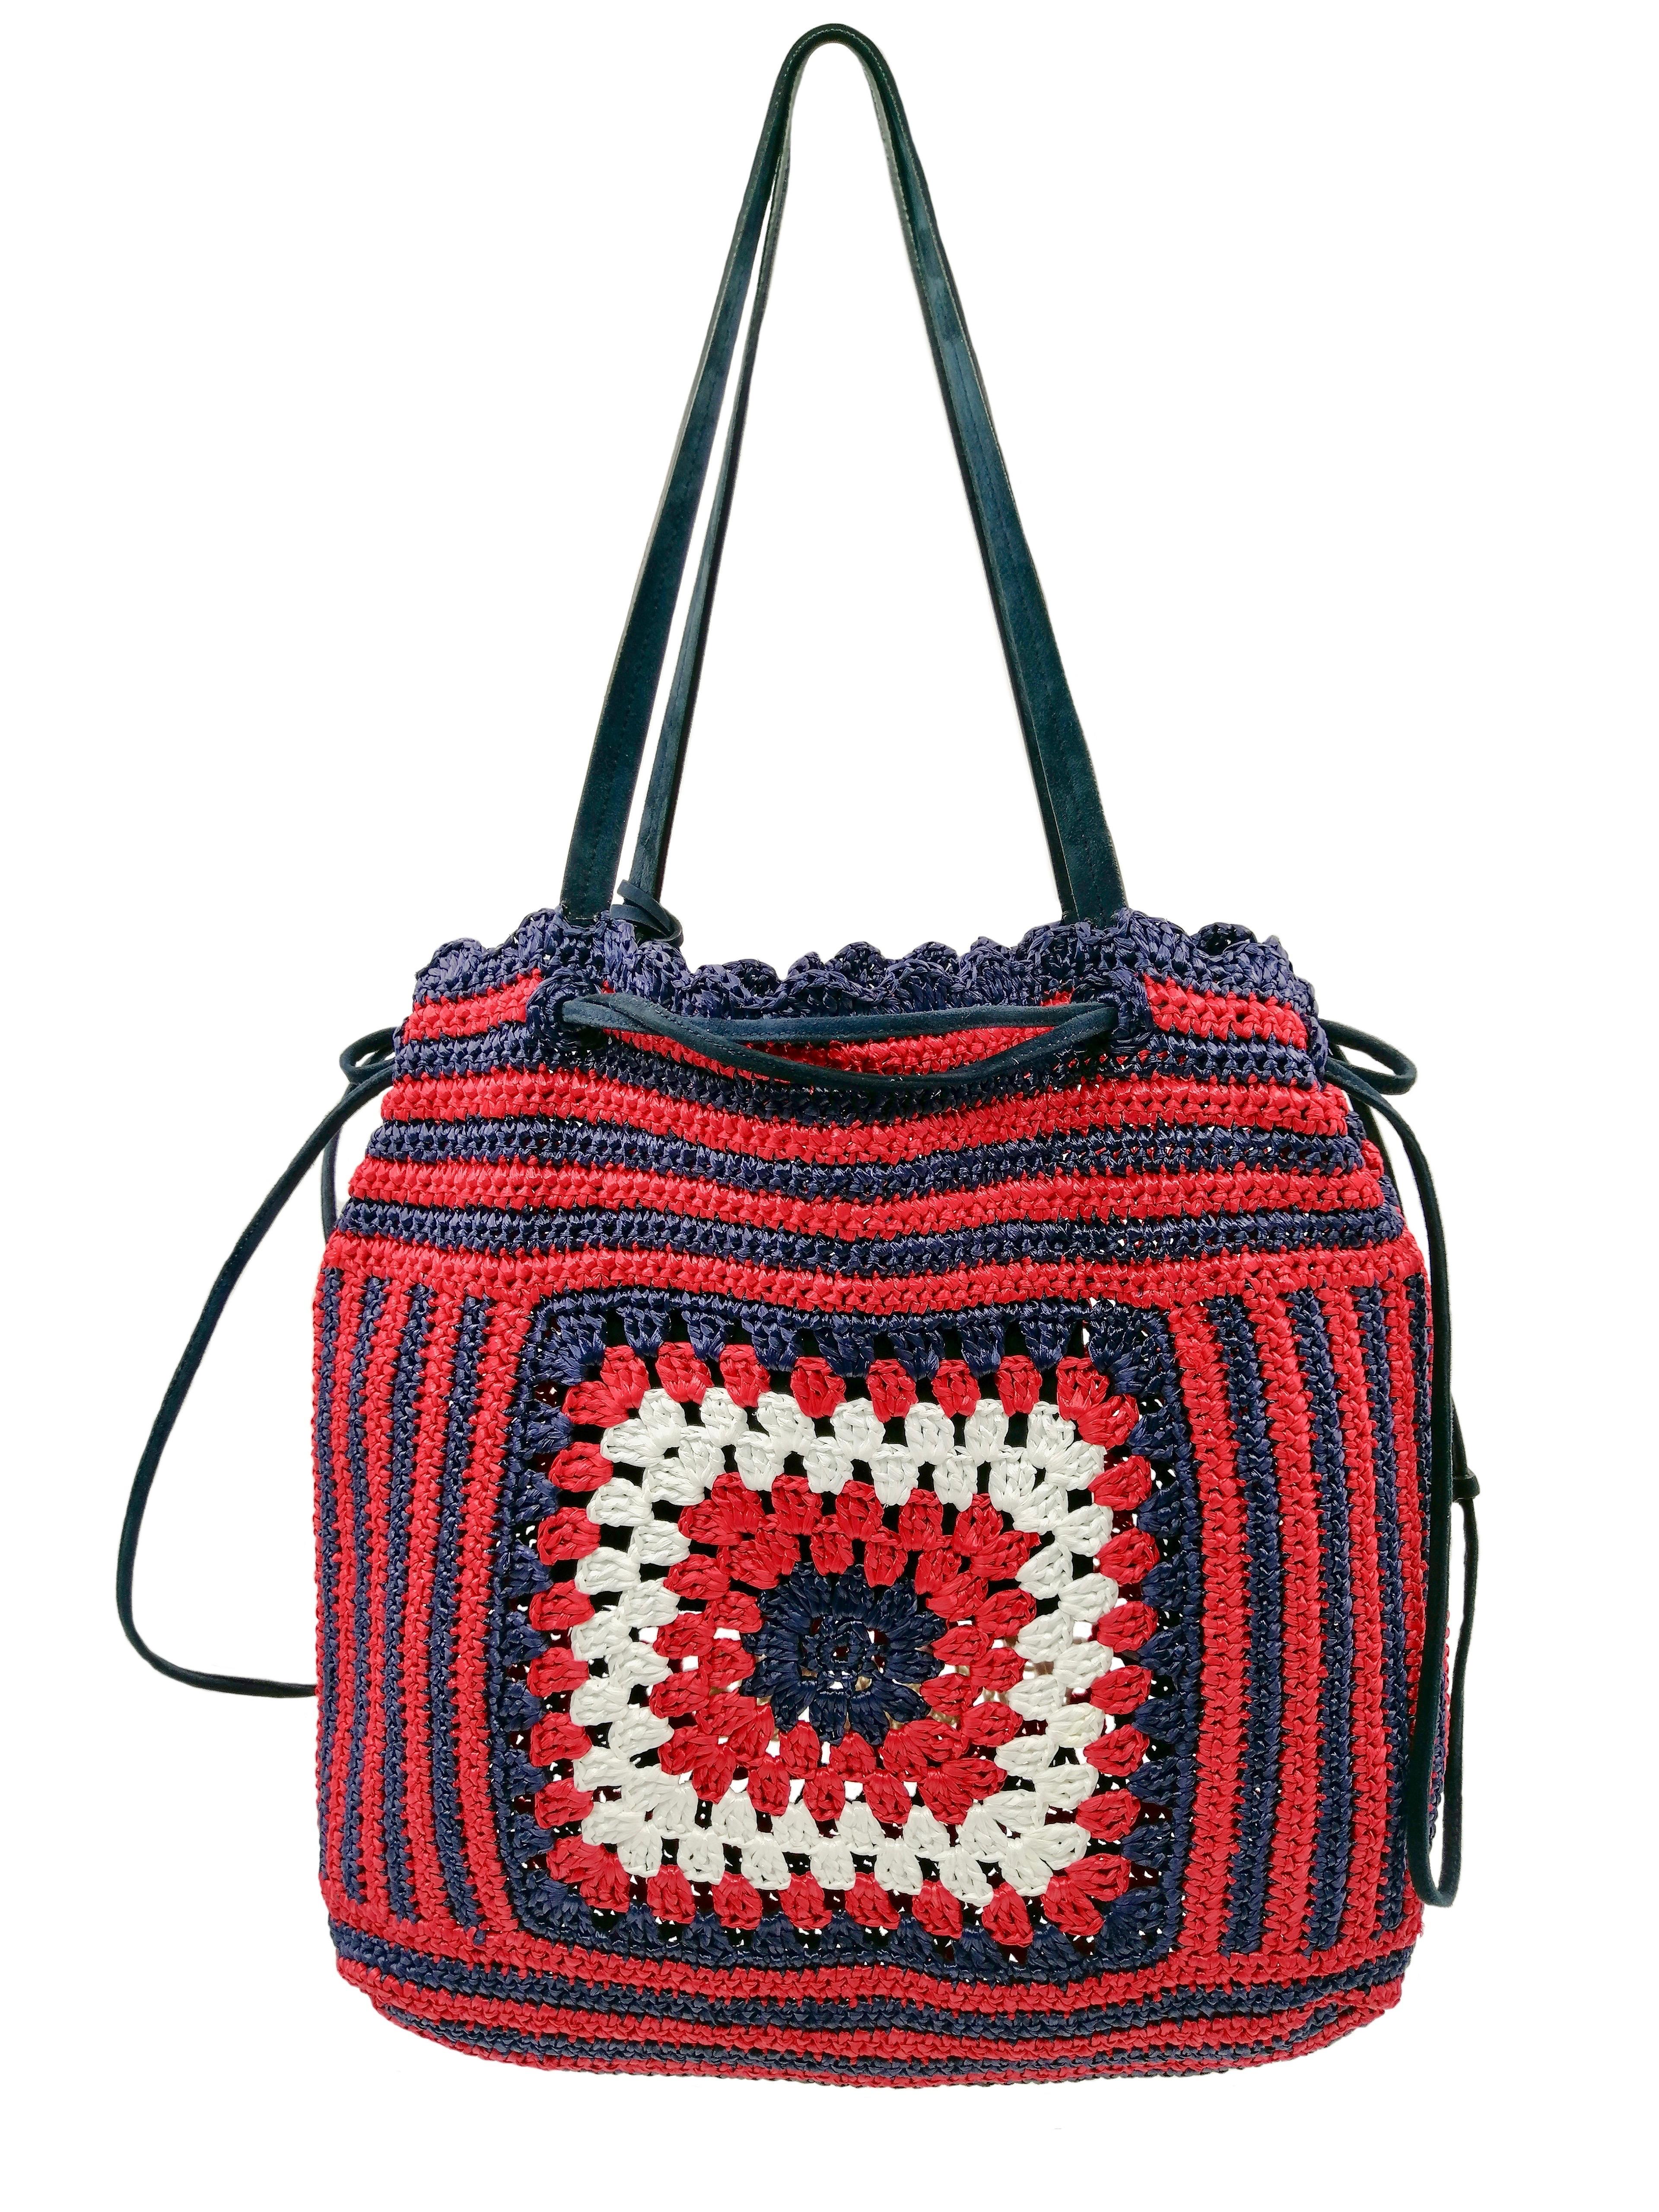 MIUMIU  rafia crochet shoulder bag  In Good Condition For Sale In Rubiera, RE